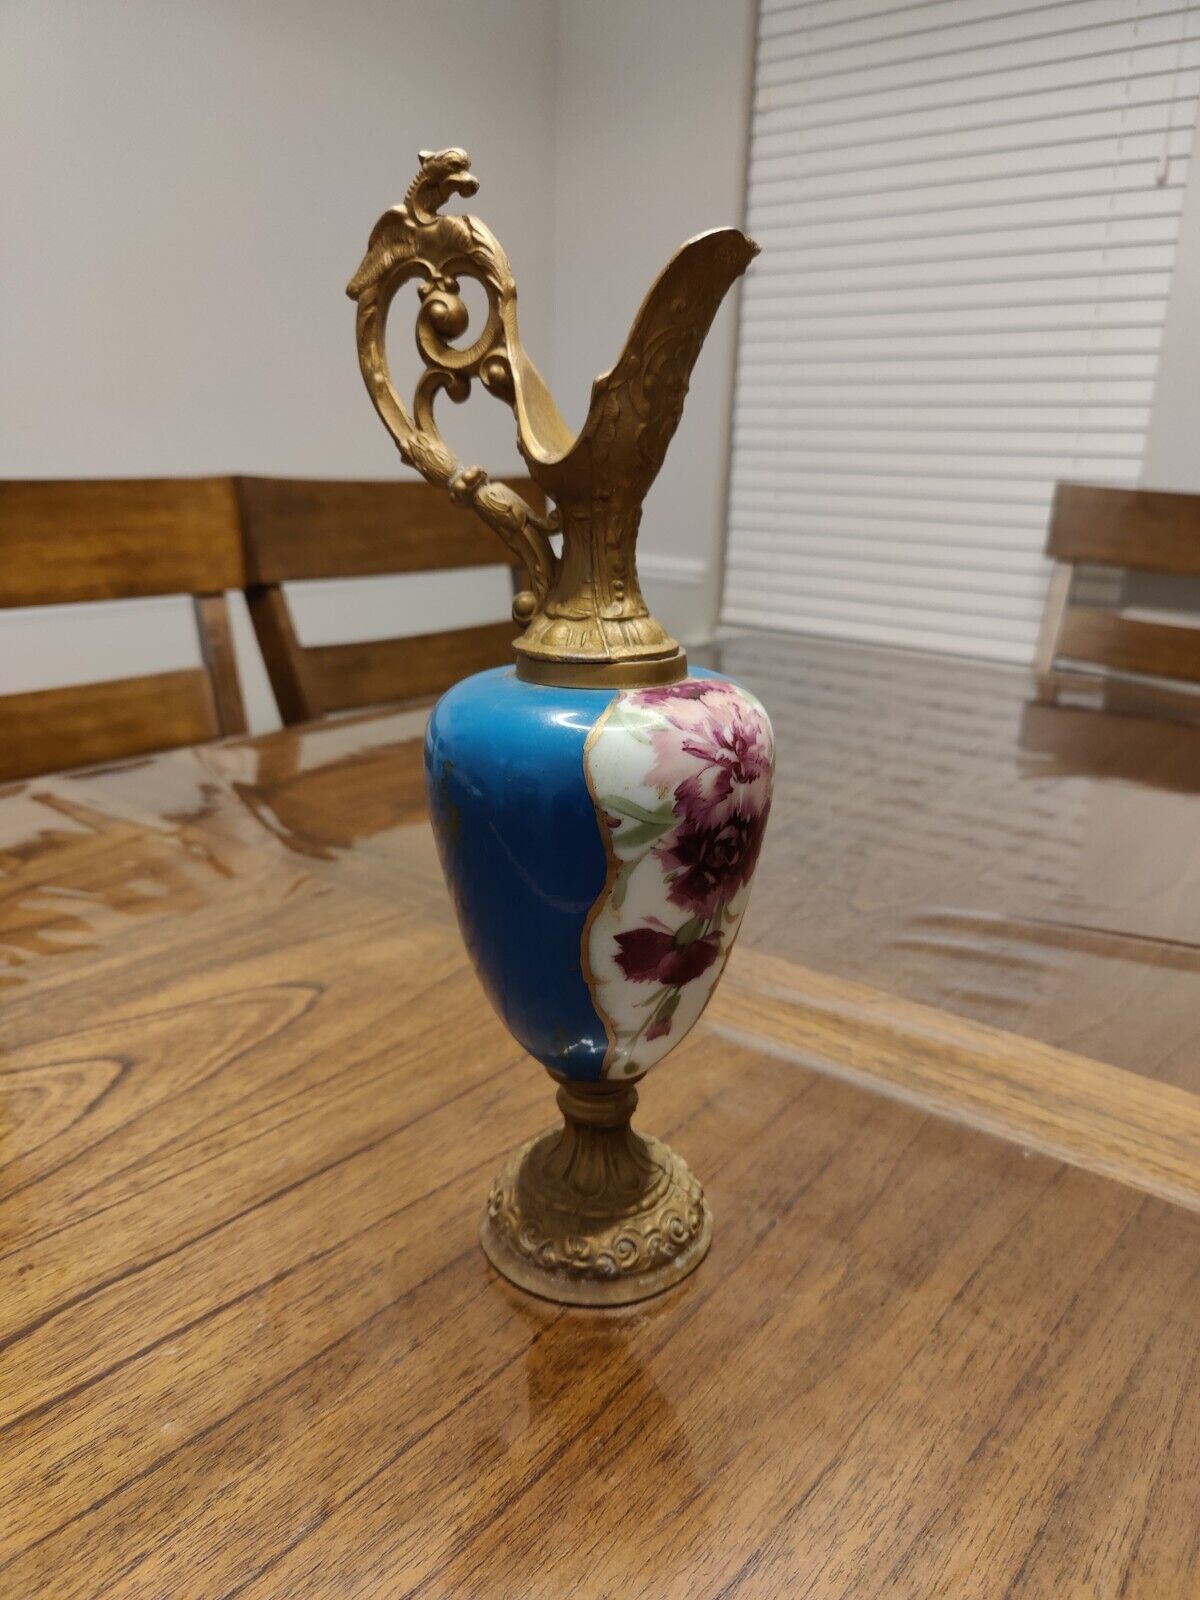 Antique Ornate Brass and Blue Enamel Decorative Mantle Urn